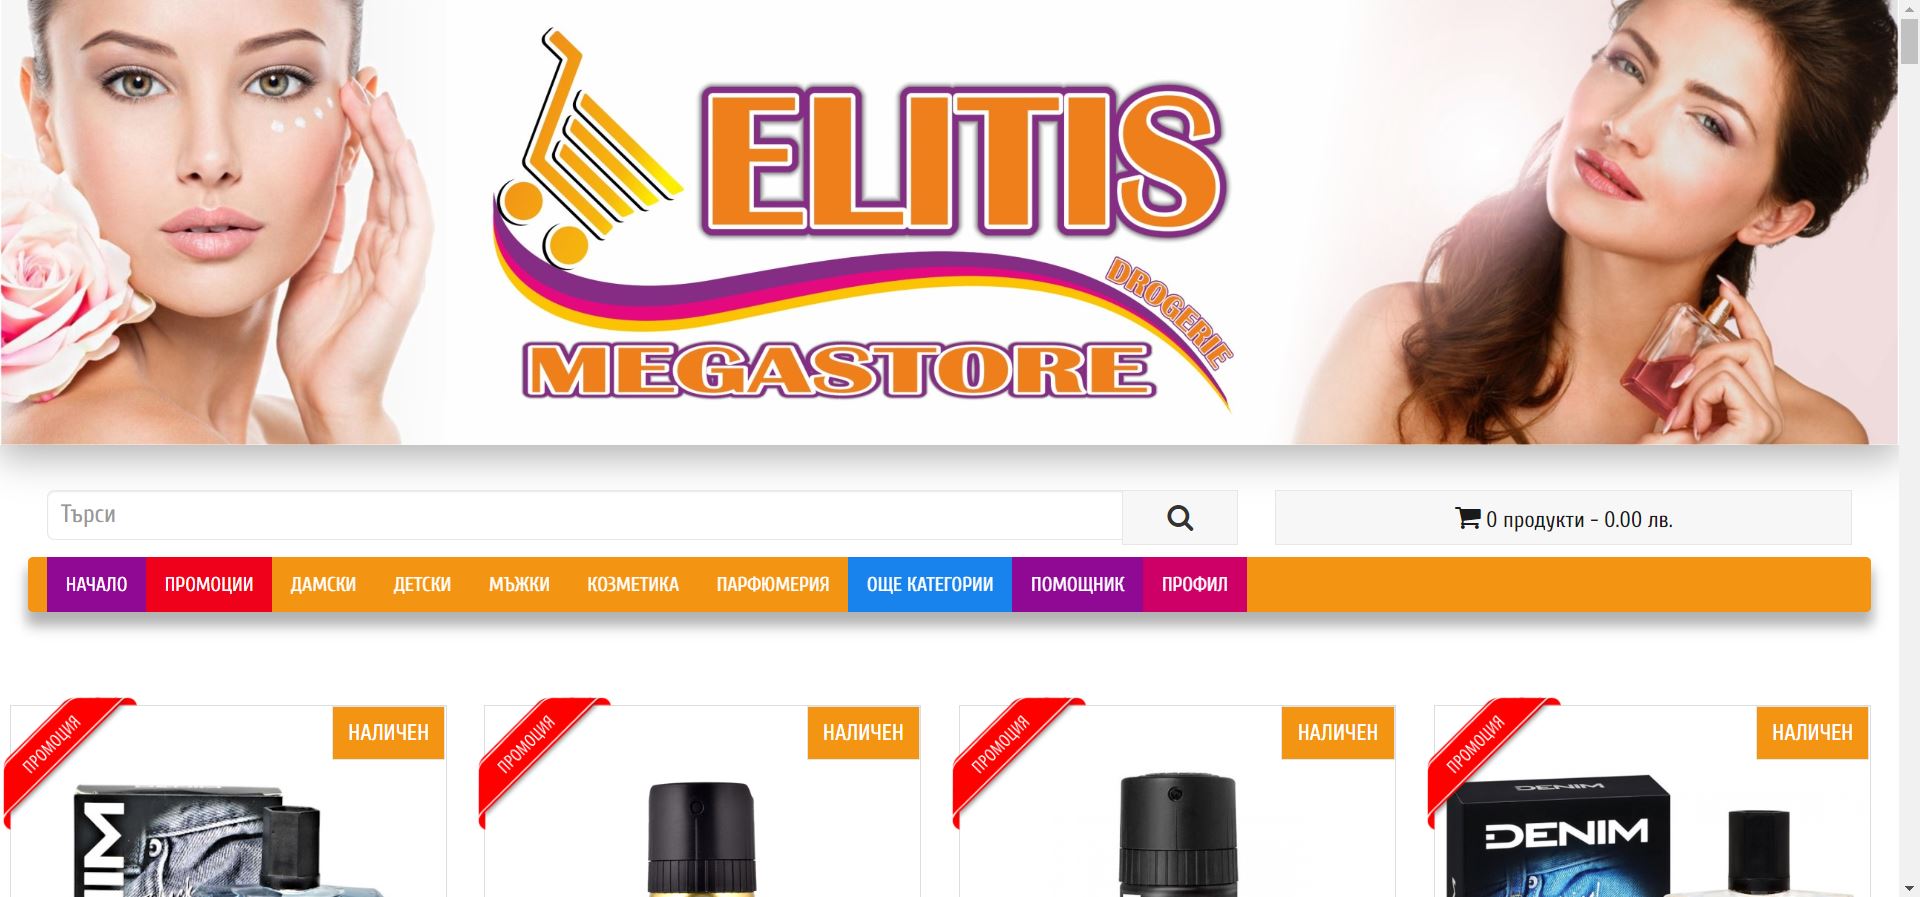 Онлайн магазин на Елитис Мегастор